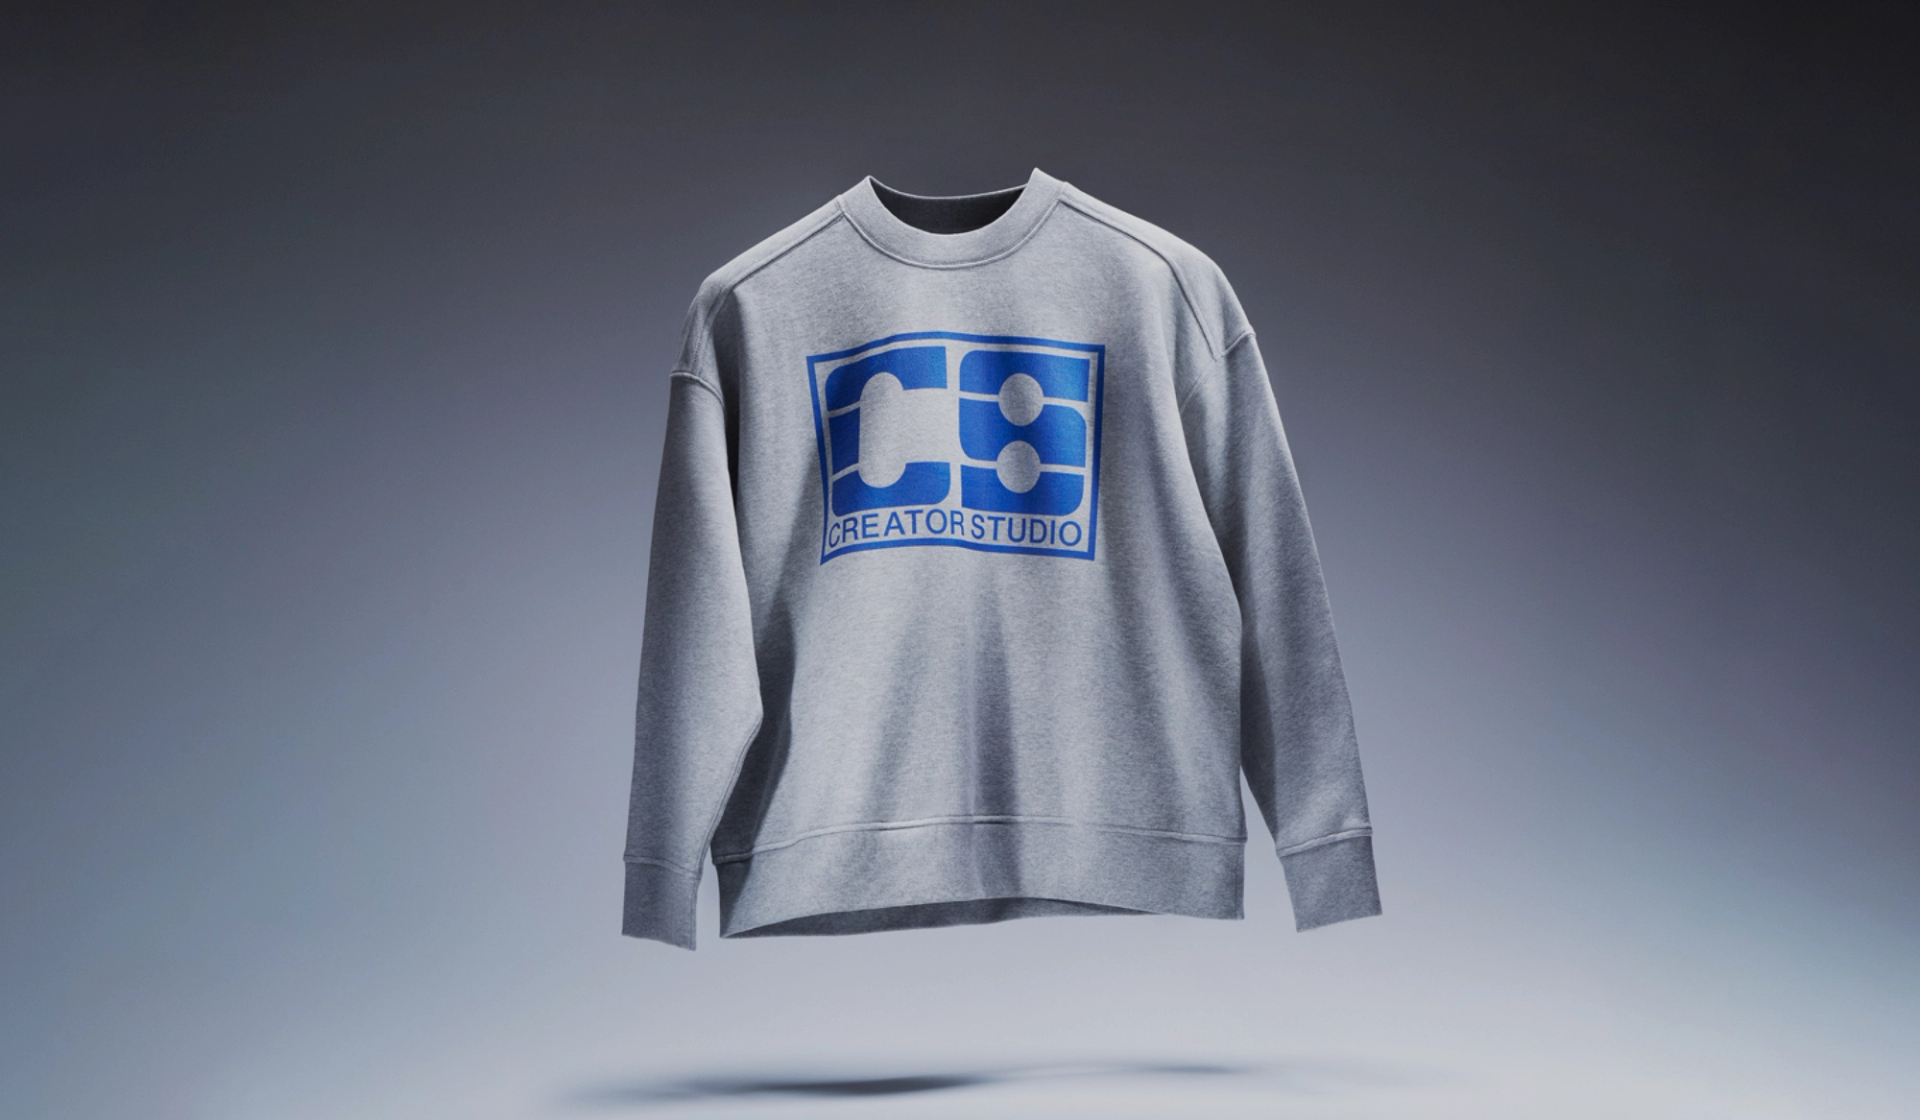 Grey Sweatshirt floating with Creator Studio logo in blue